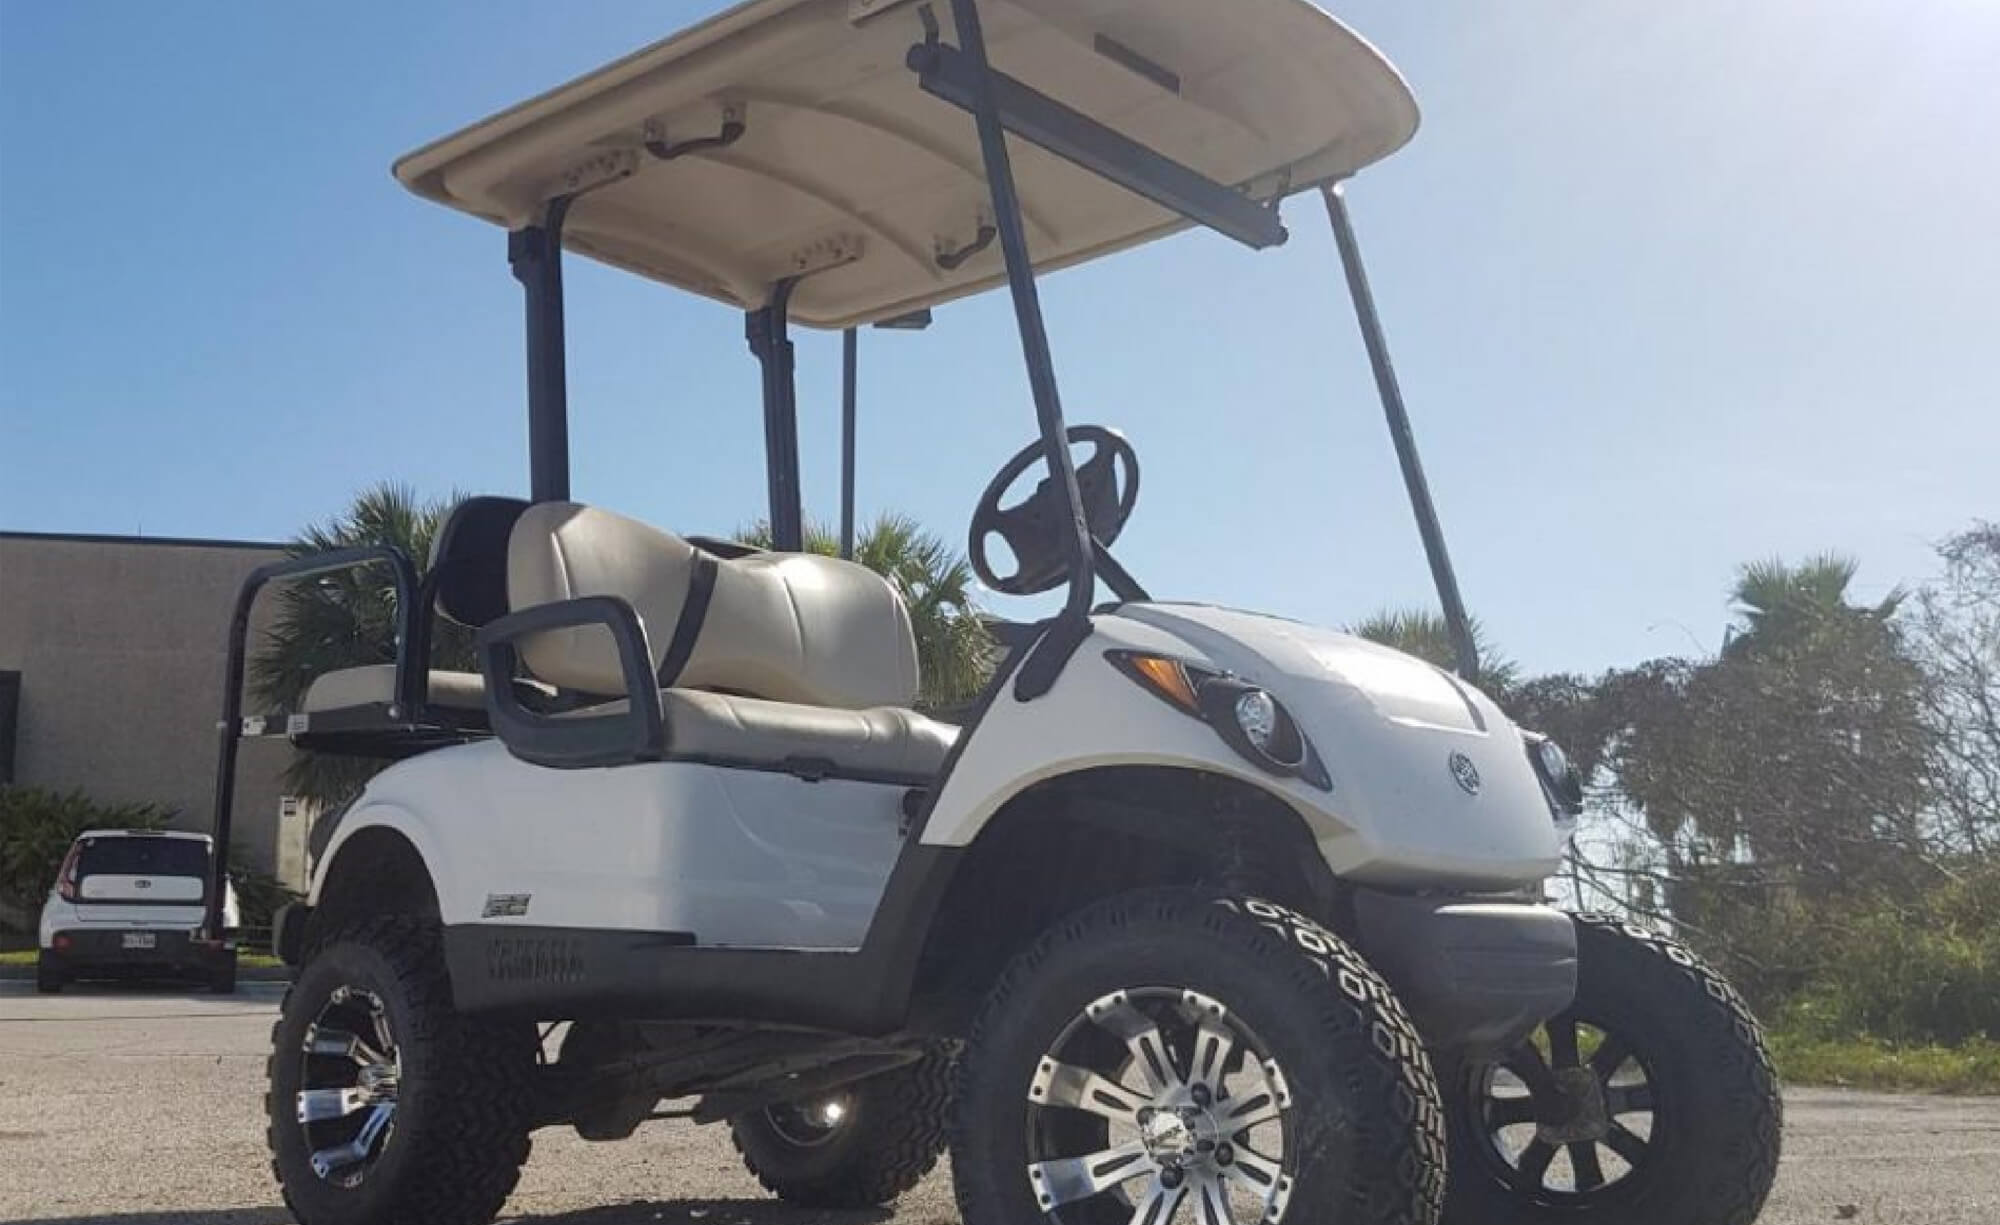 4 Passenger Golf Cart | Golf Cart Rental Georgia - Coast to Coast Rental